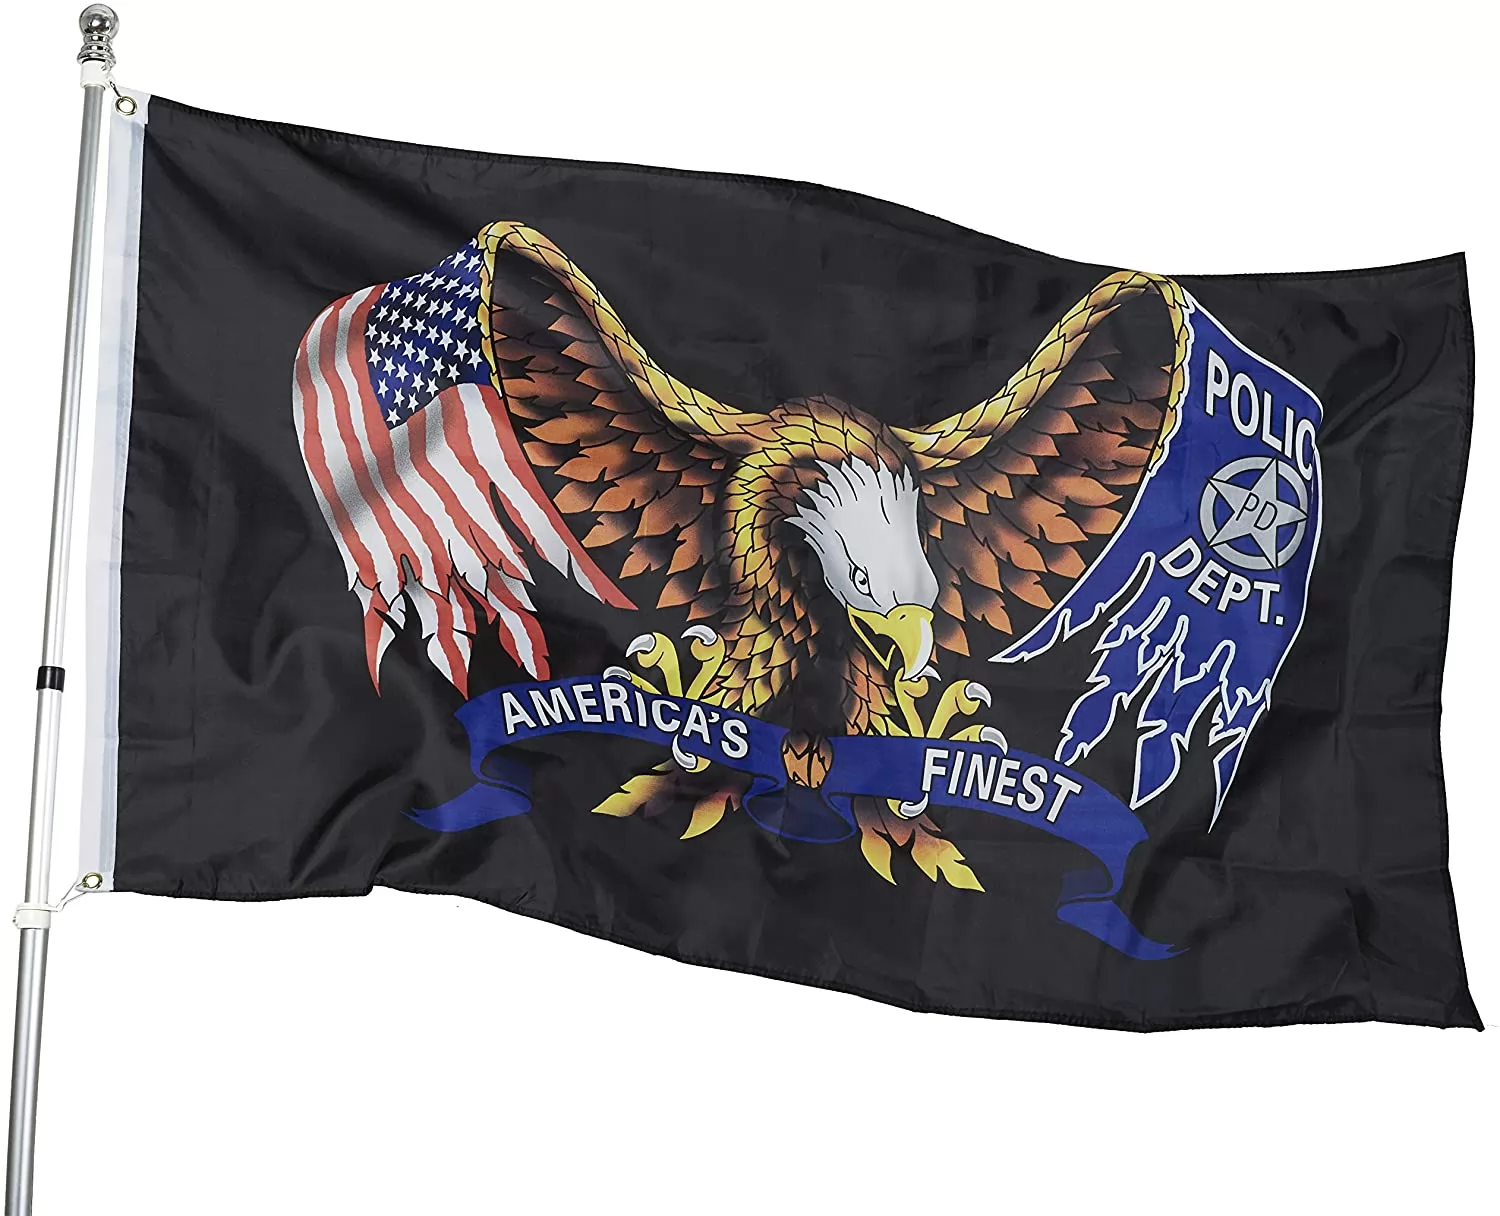 Homissor USA Police Dept Eagle Flag - America’s Finest Flag - 3" x 5" Durable Polyester Indoor Outdoor Banner